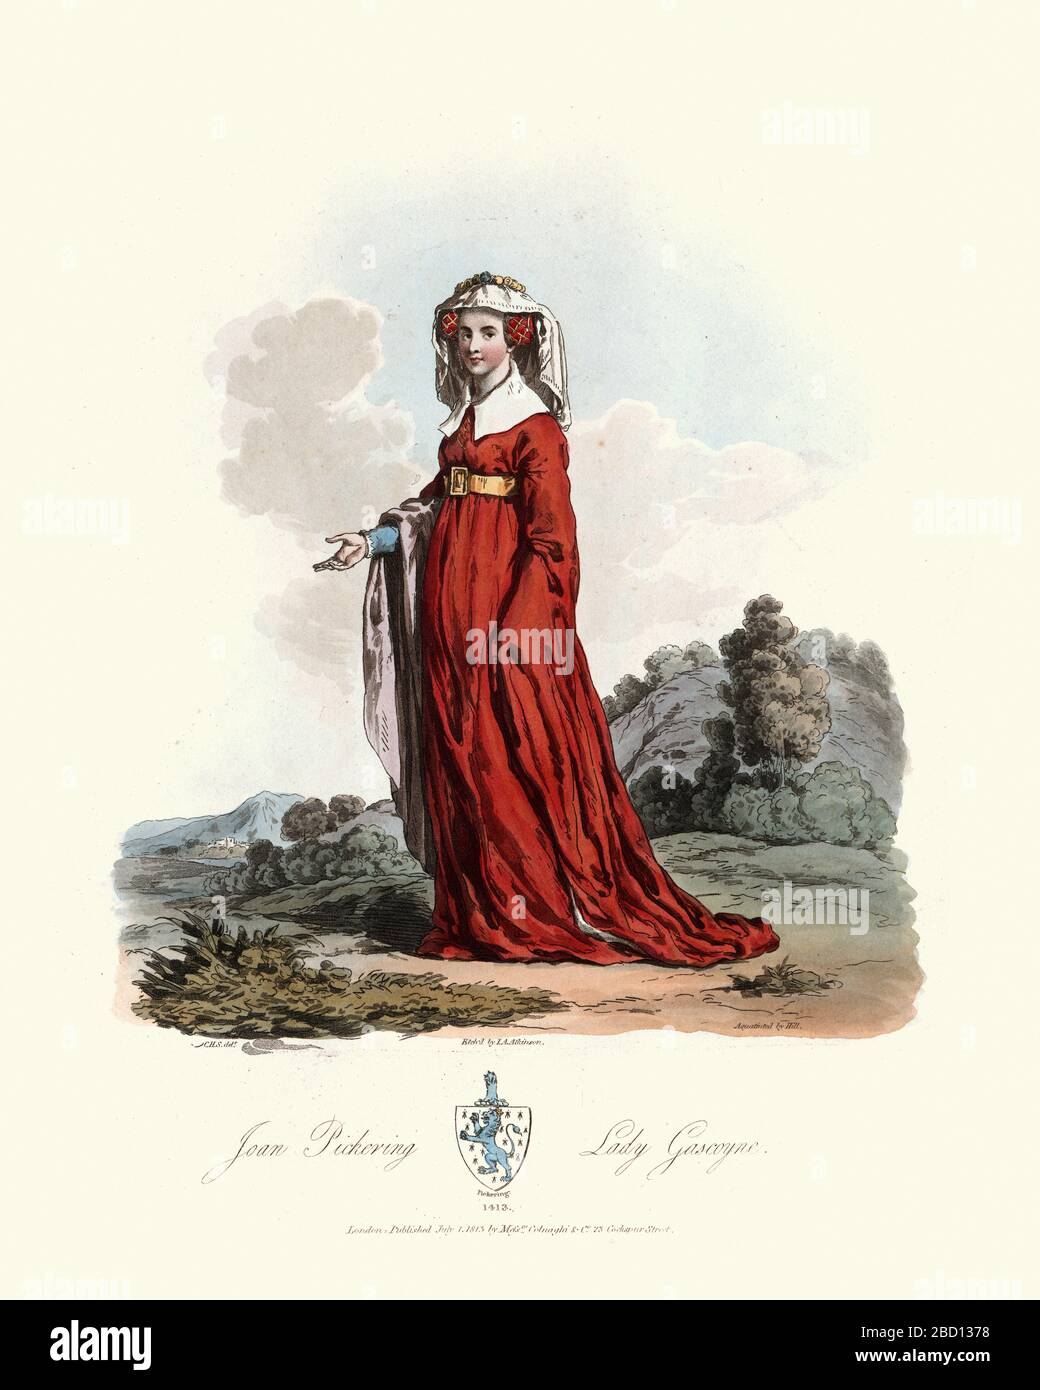 Moda medieval, joven mujer medieval con un largo vestido rojo. Joan de Pickering, Lady Gascoigne, siglo XV. Esposa de Sir William Gascoigne. Foto de stock